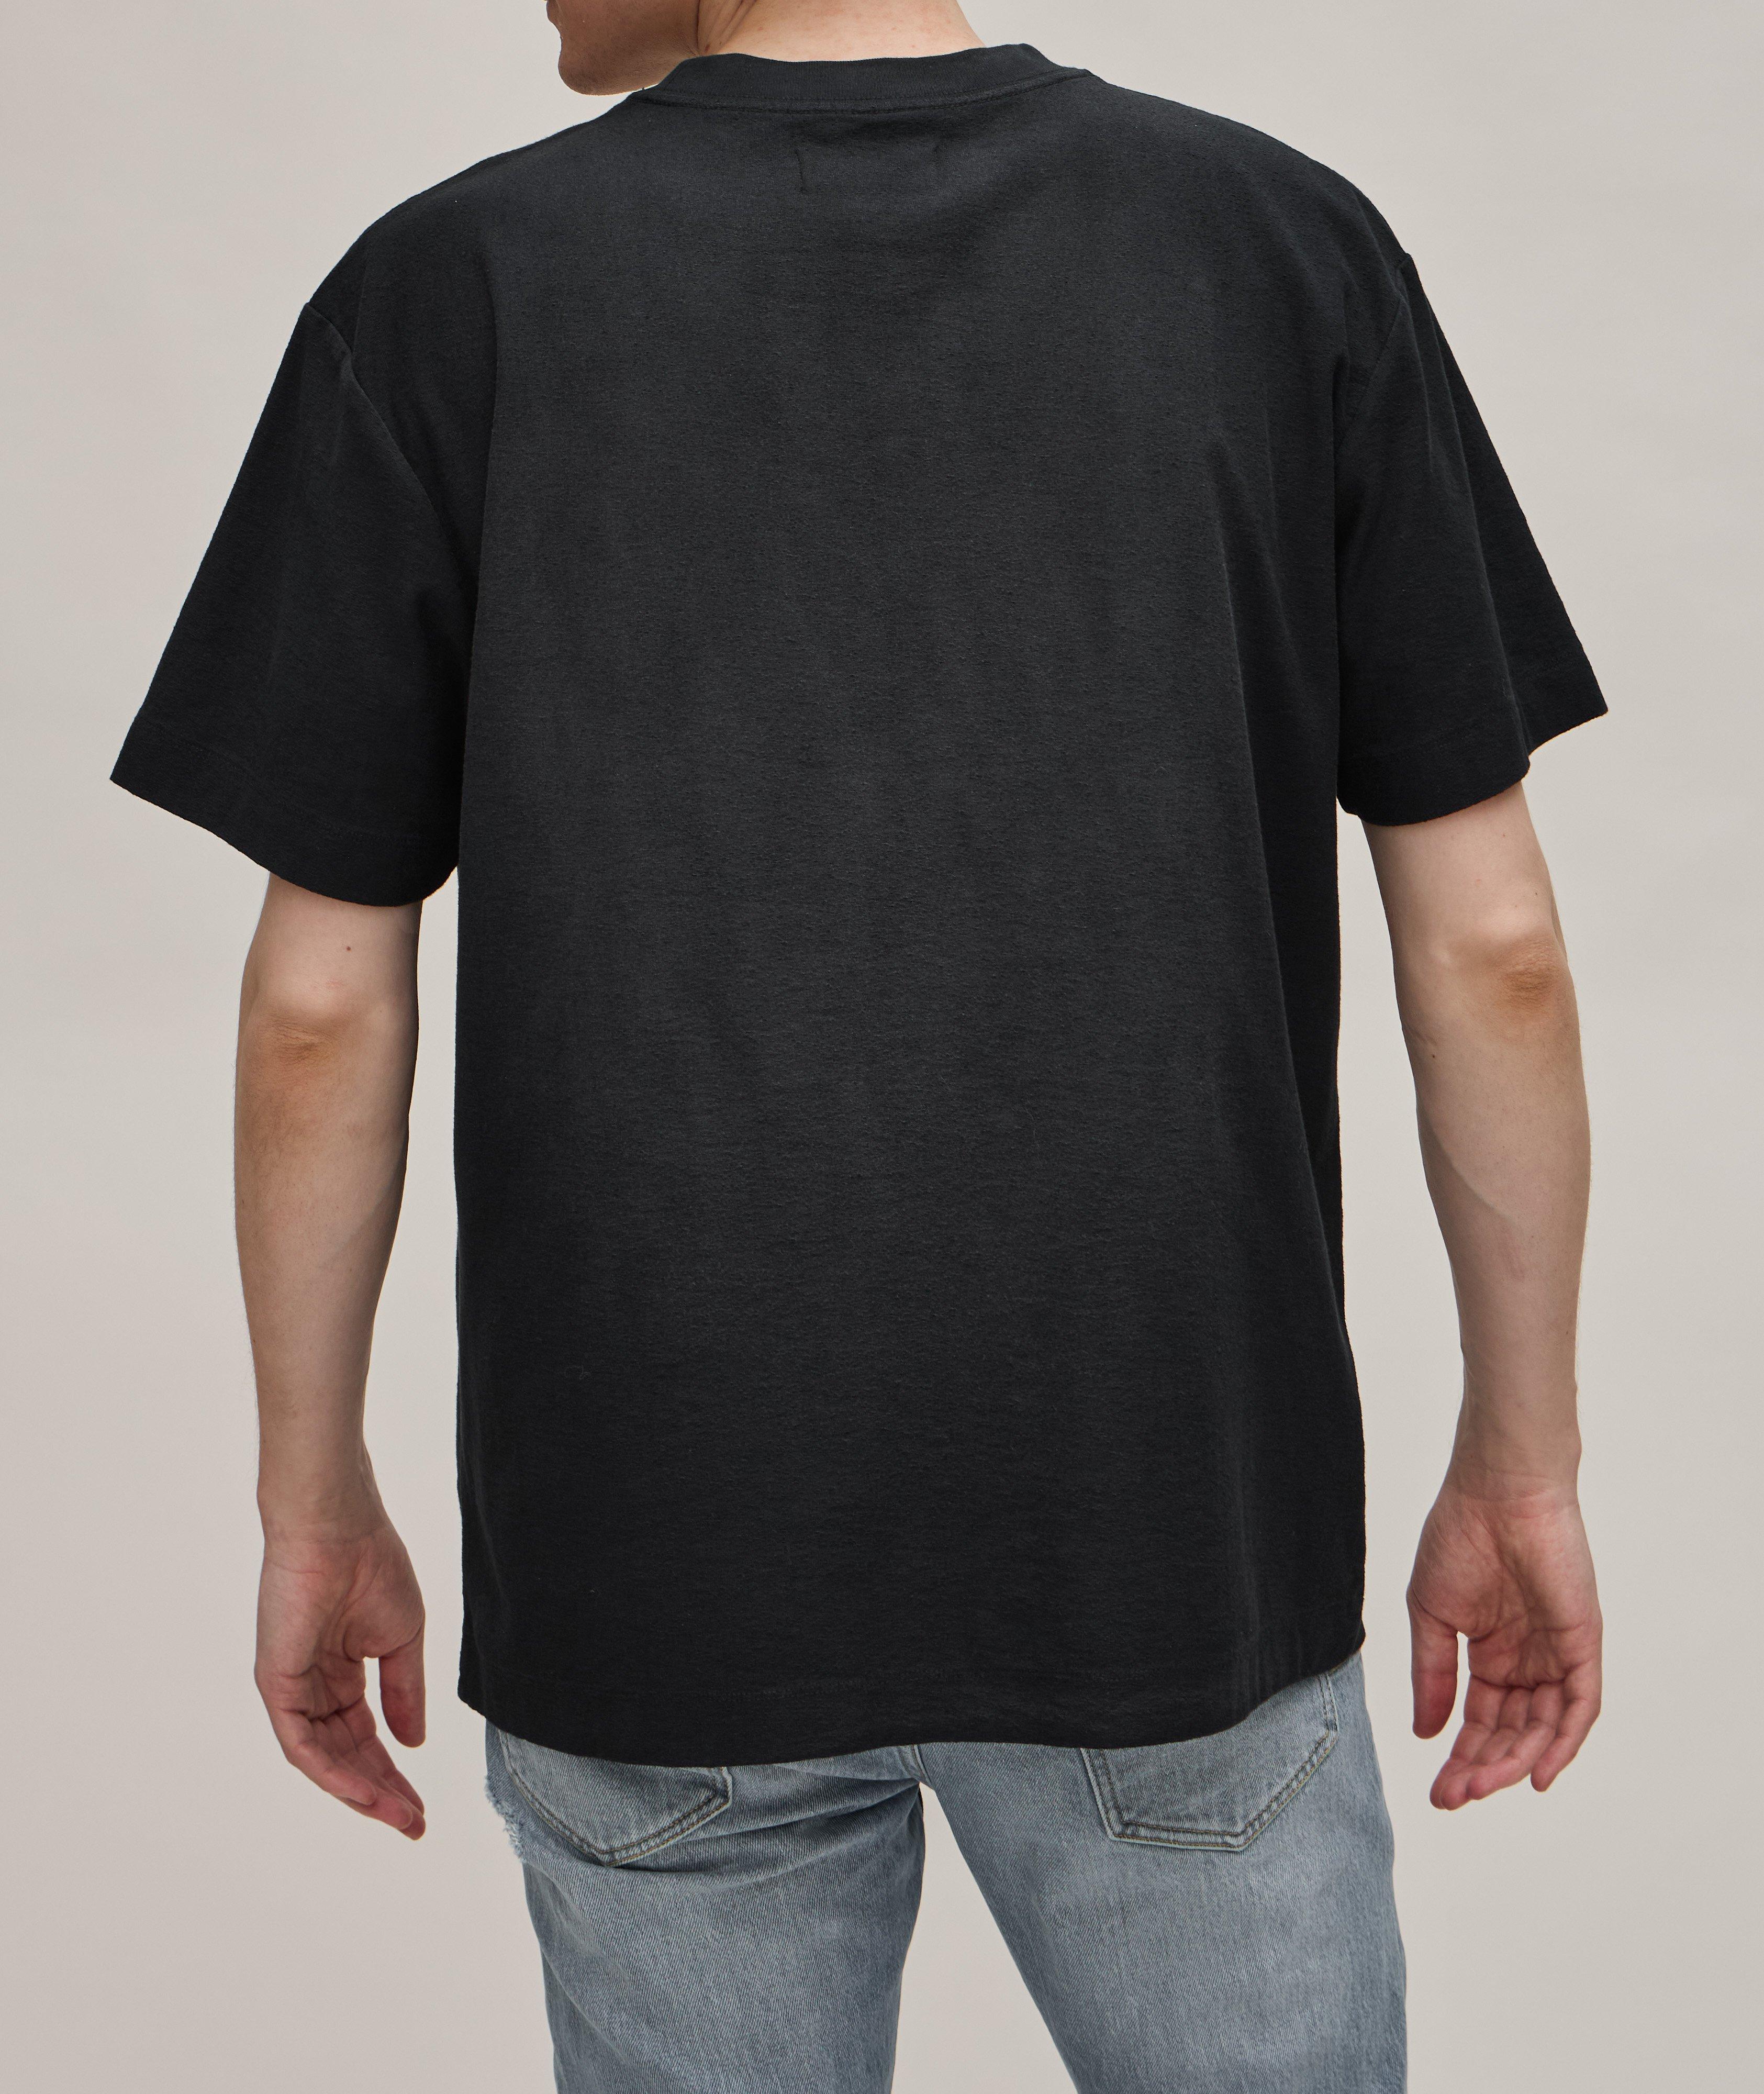 Distressed Print Cotton T-Shirt  image 2